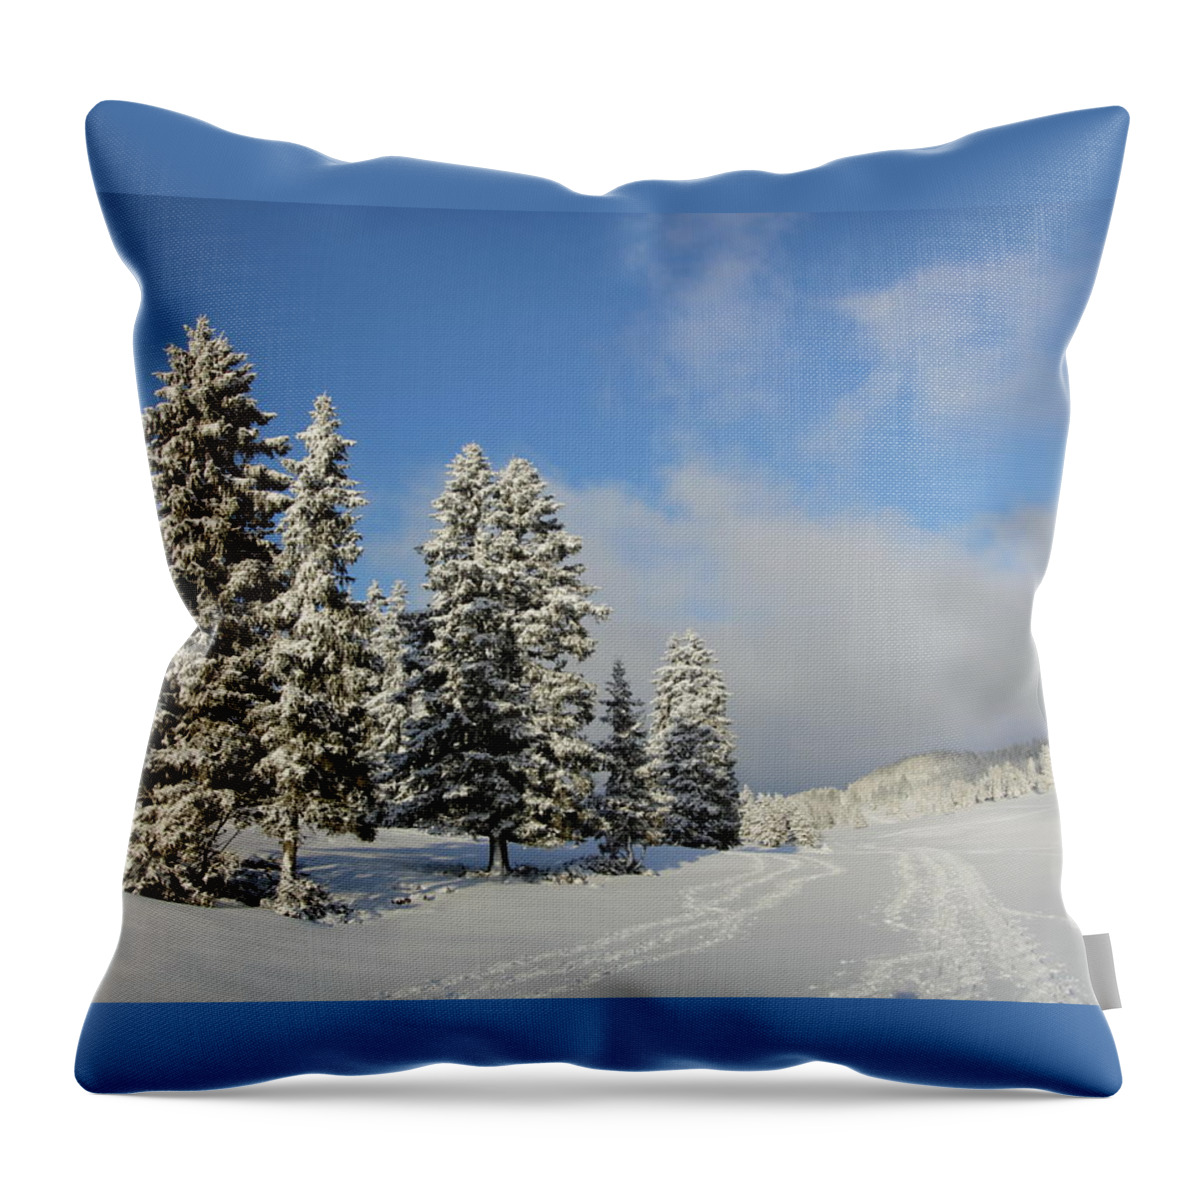 Background Throw Pillow featuring the photograph Fir tree in winter, Jura mountain, Switzerland by Elenarts - Elena Duvernay photo